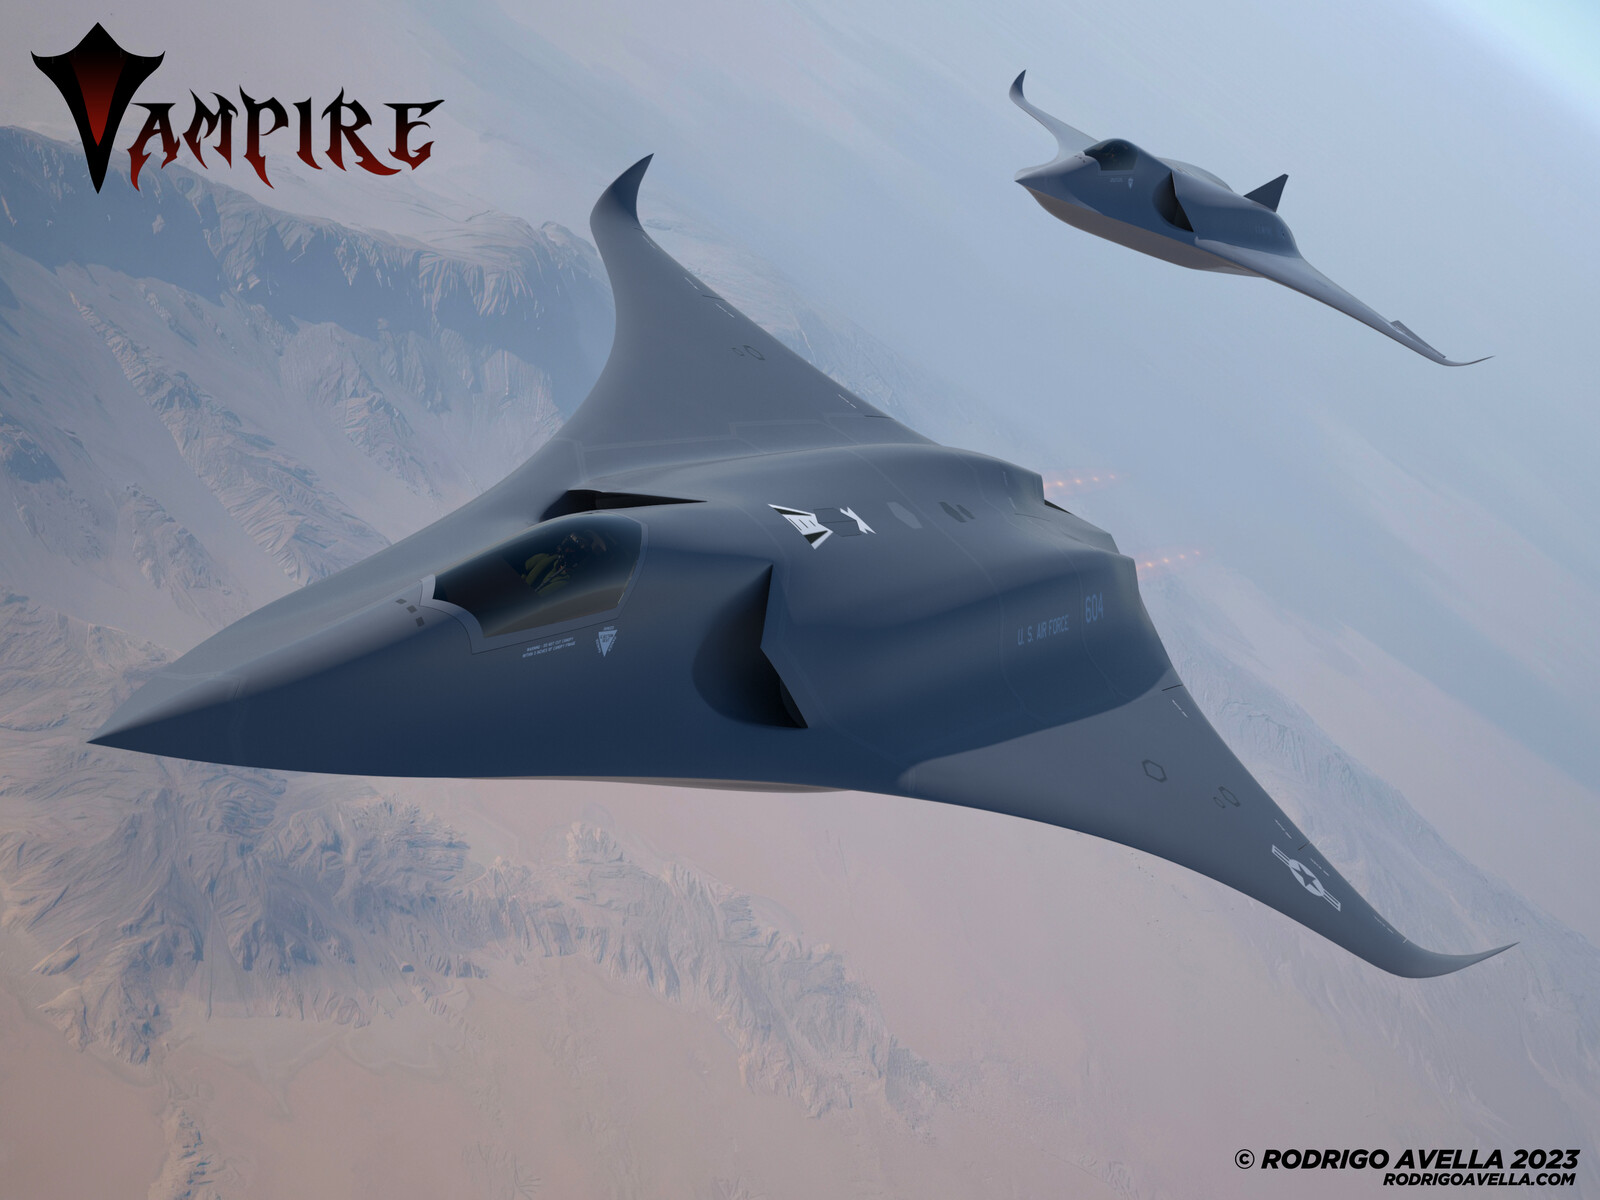 Vampire - Sixth generation fighter concept